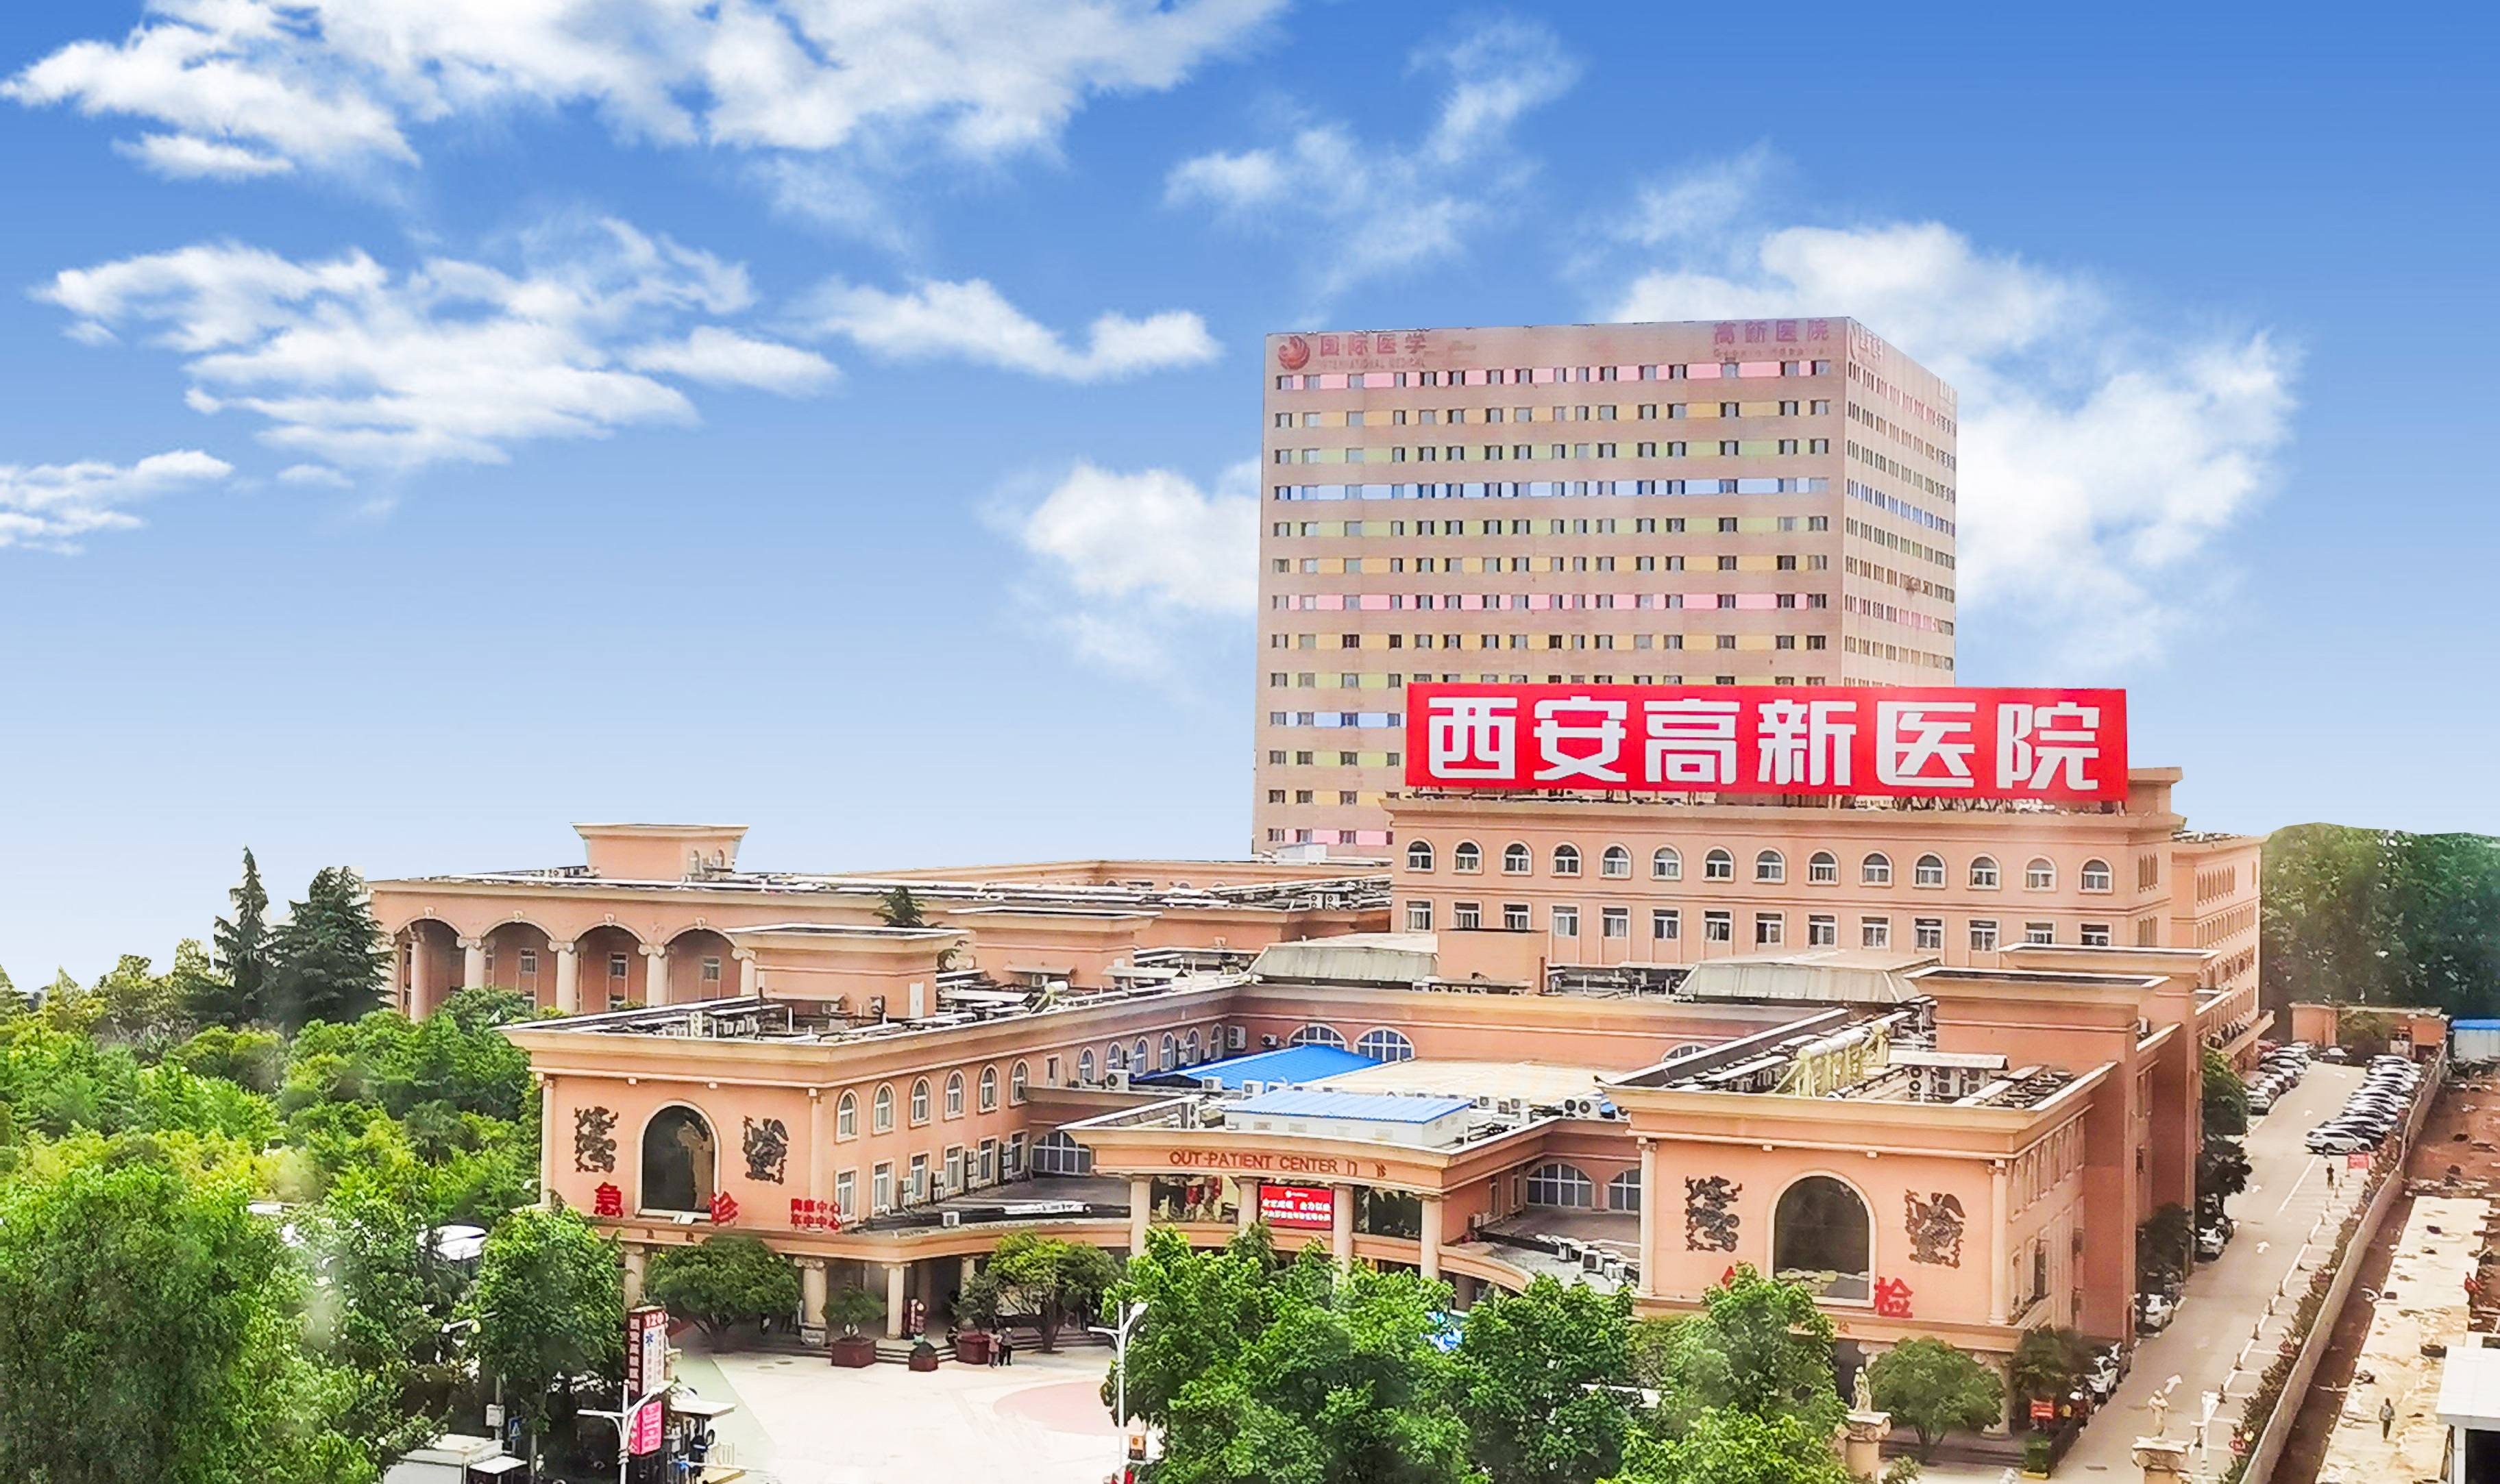 Xi’an Gaoxin Hospital in Gaoxin, China